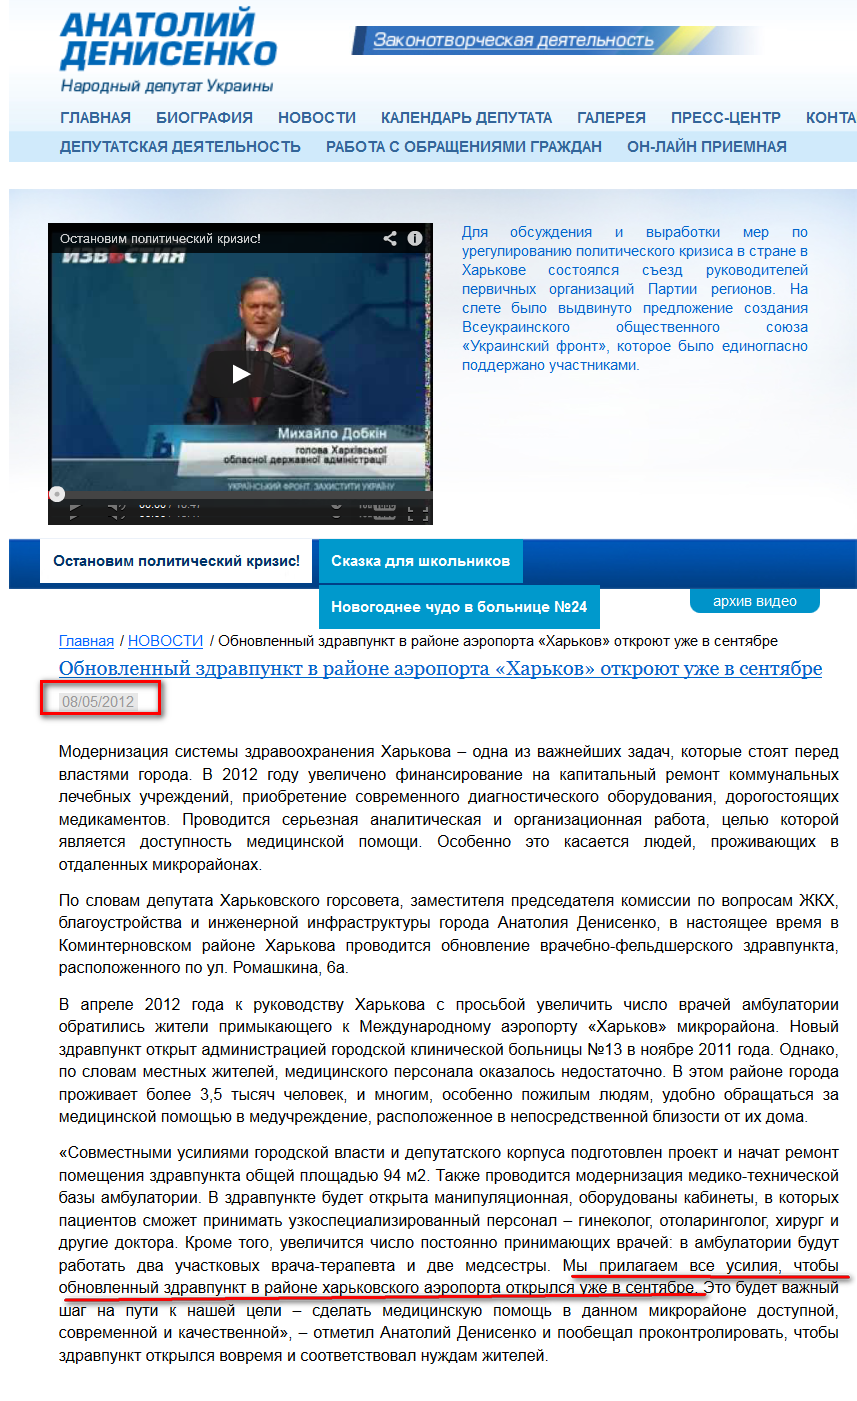 http://denisenko.kharkov.ua/news/101-2012-05-08.html